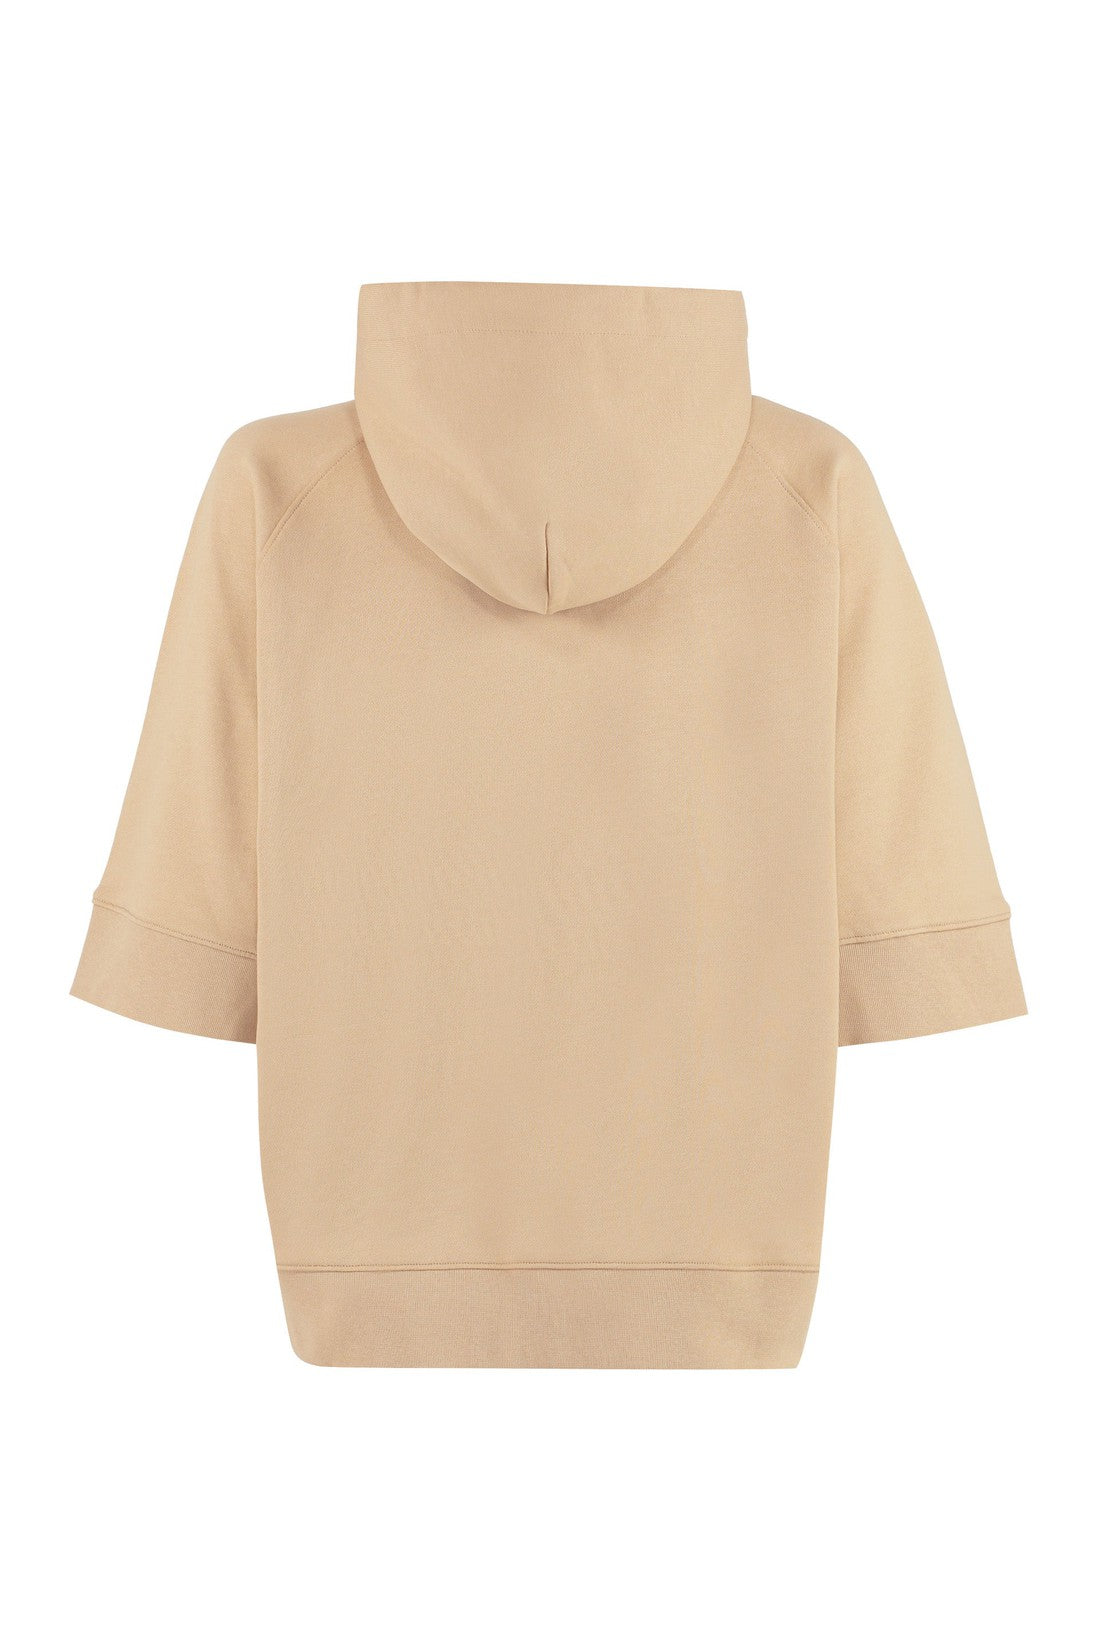 Woolrich-OUTLET-SALE-Cotton full-zip sweatshirt-ARCHIVIST